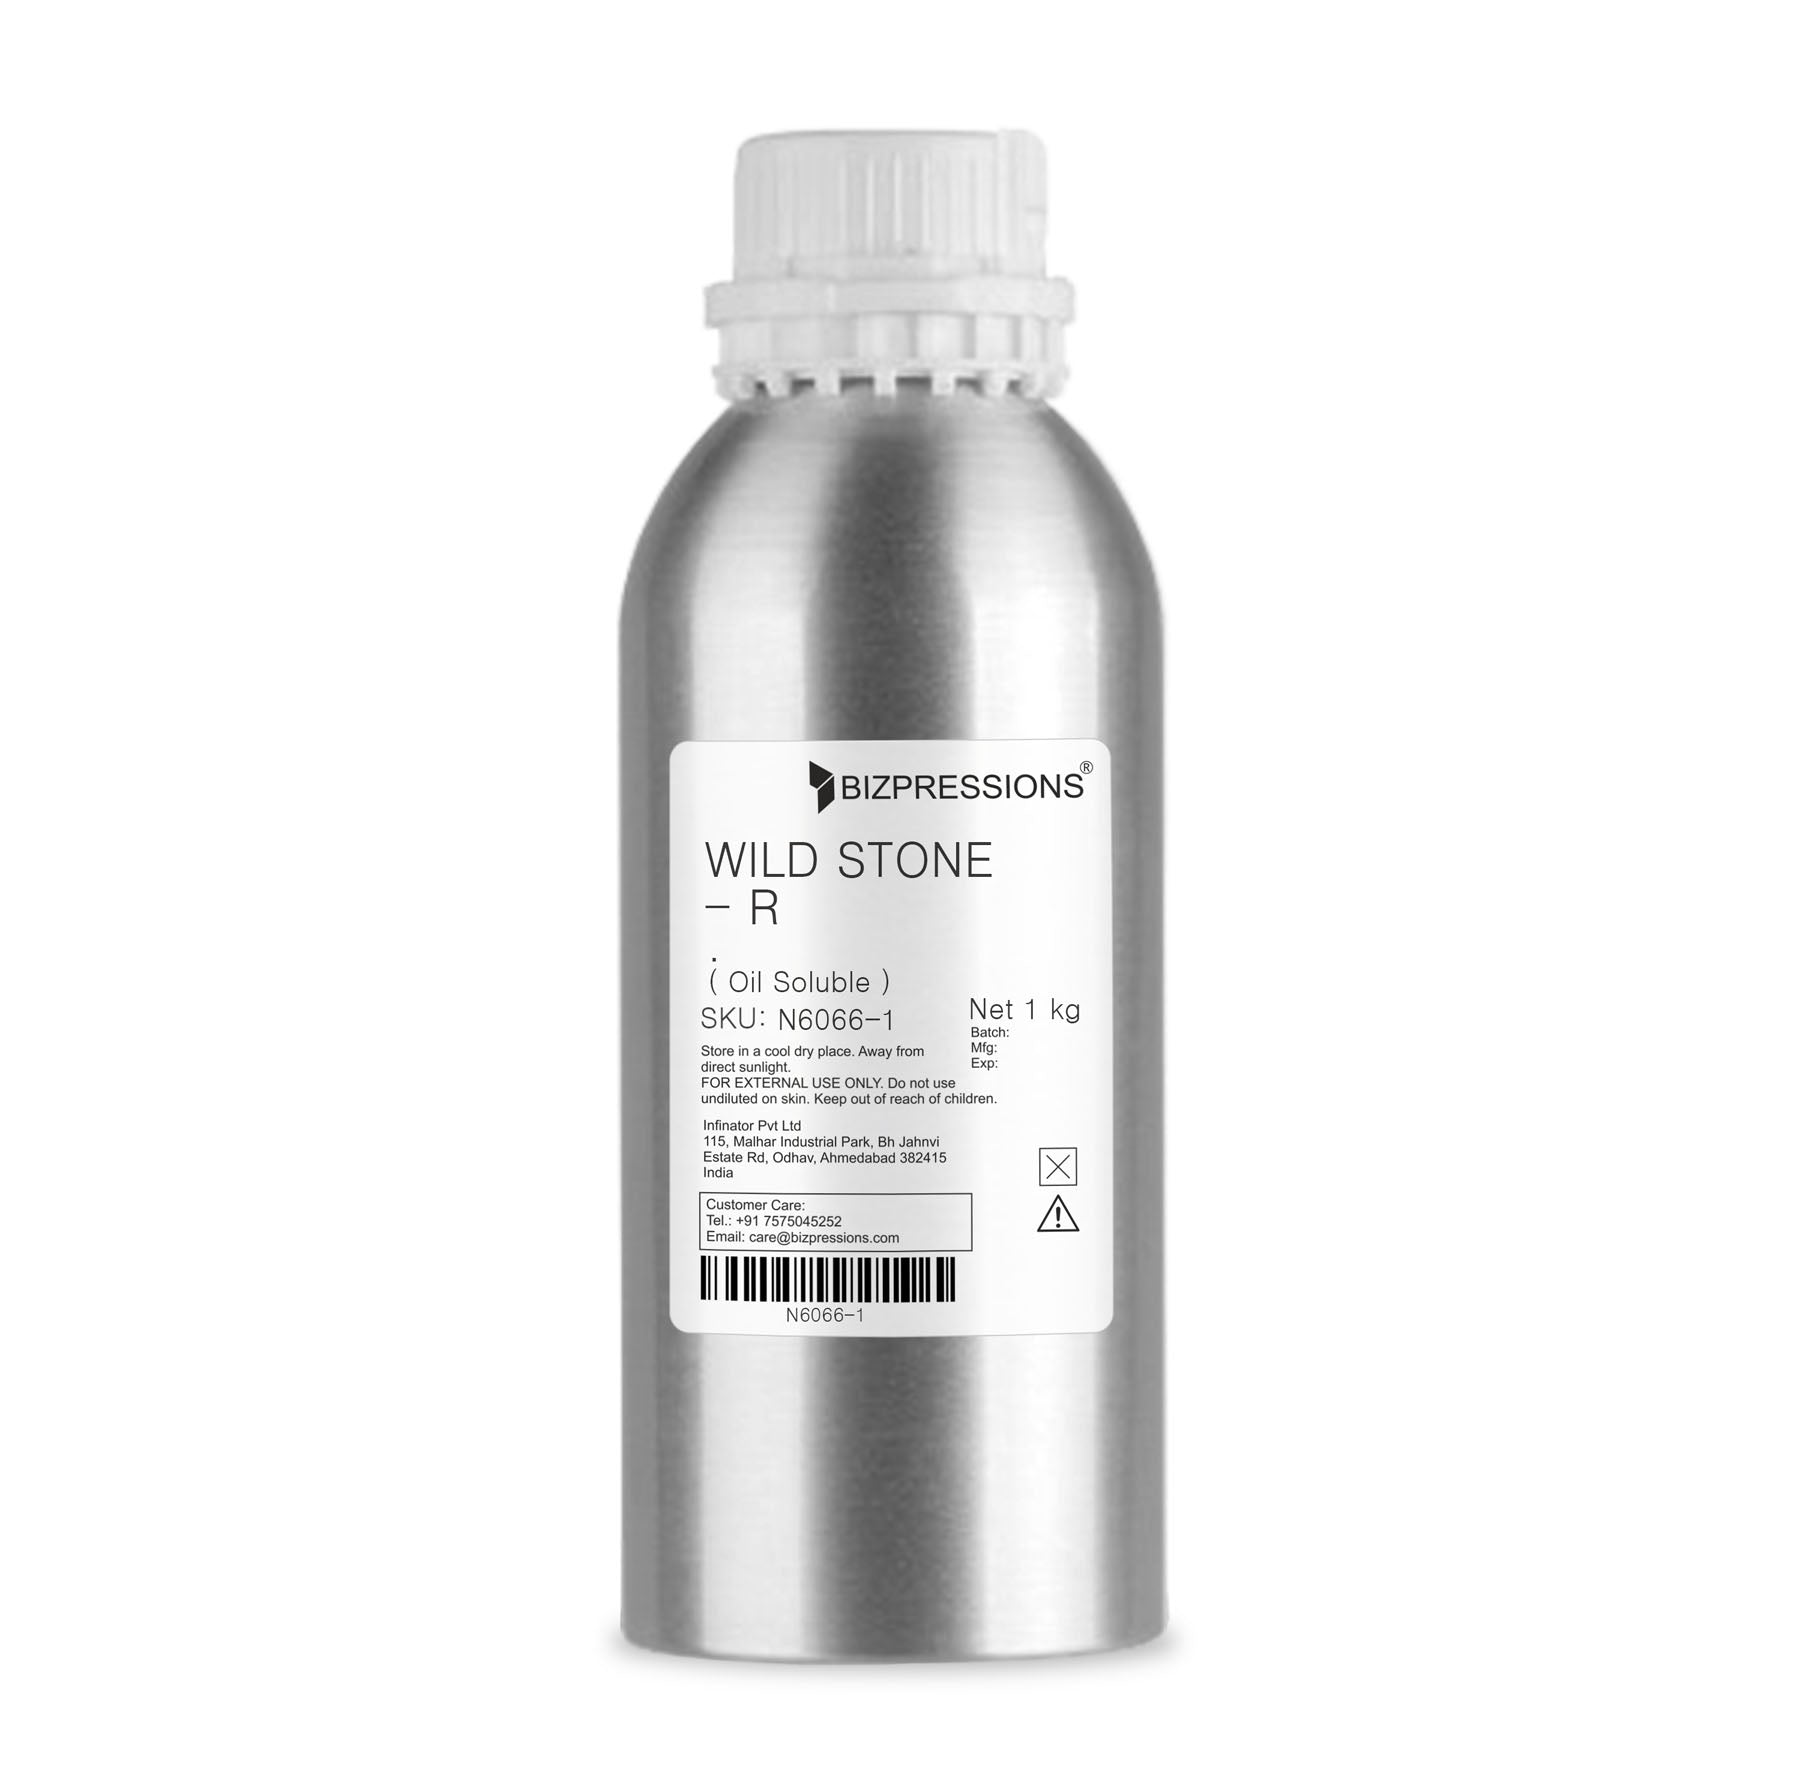 WILD STONE - R - Fragrance ( Oil Soluble ) - 1 kg